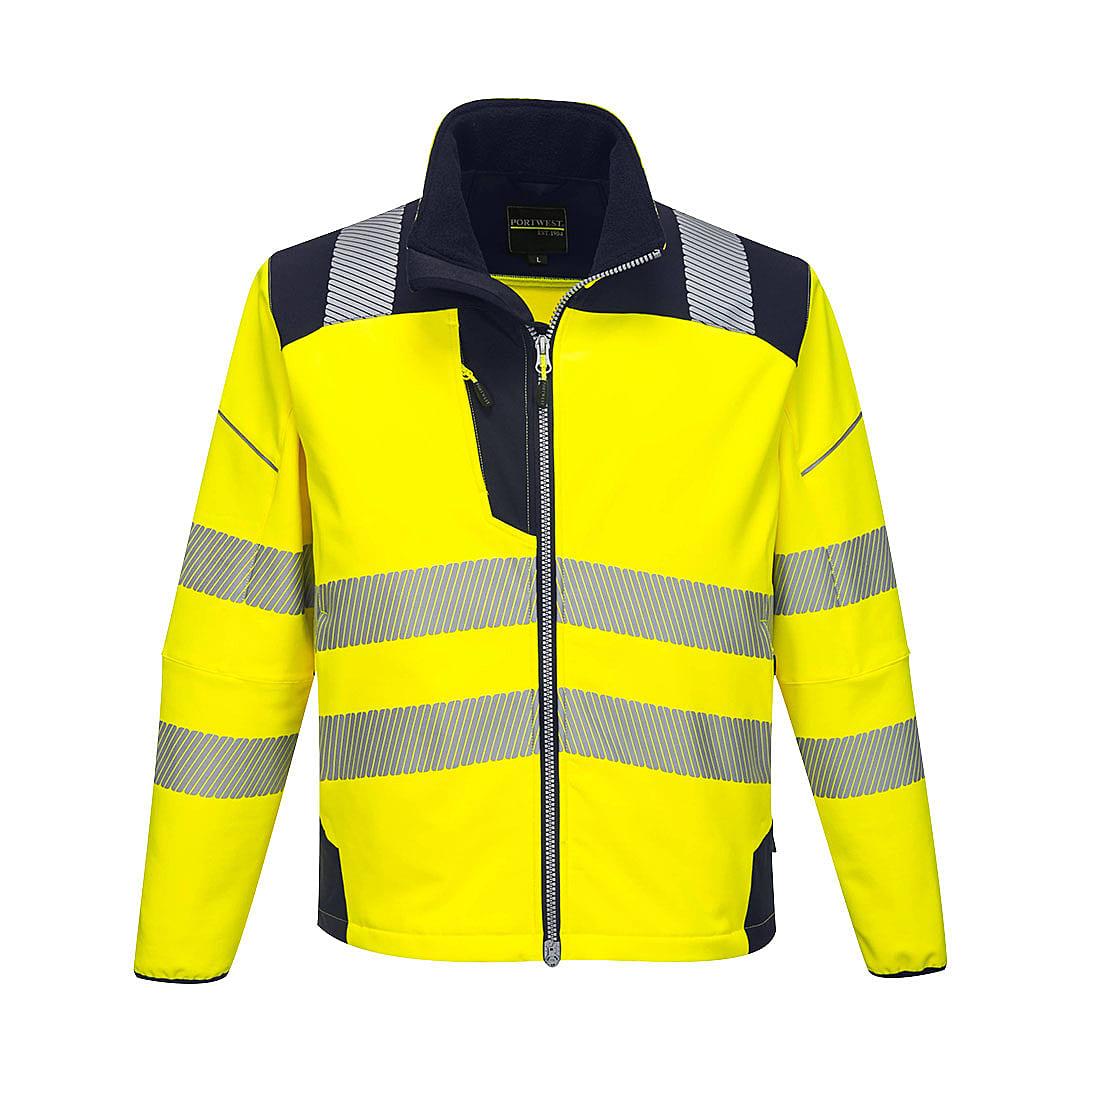 Portwest PW3 Hi-Viz Softshell Jacket in Yellow / Navy (Product Code: T402)